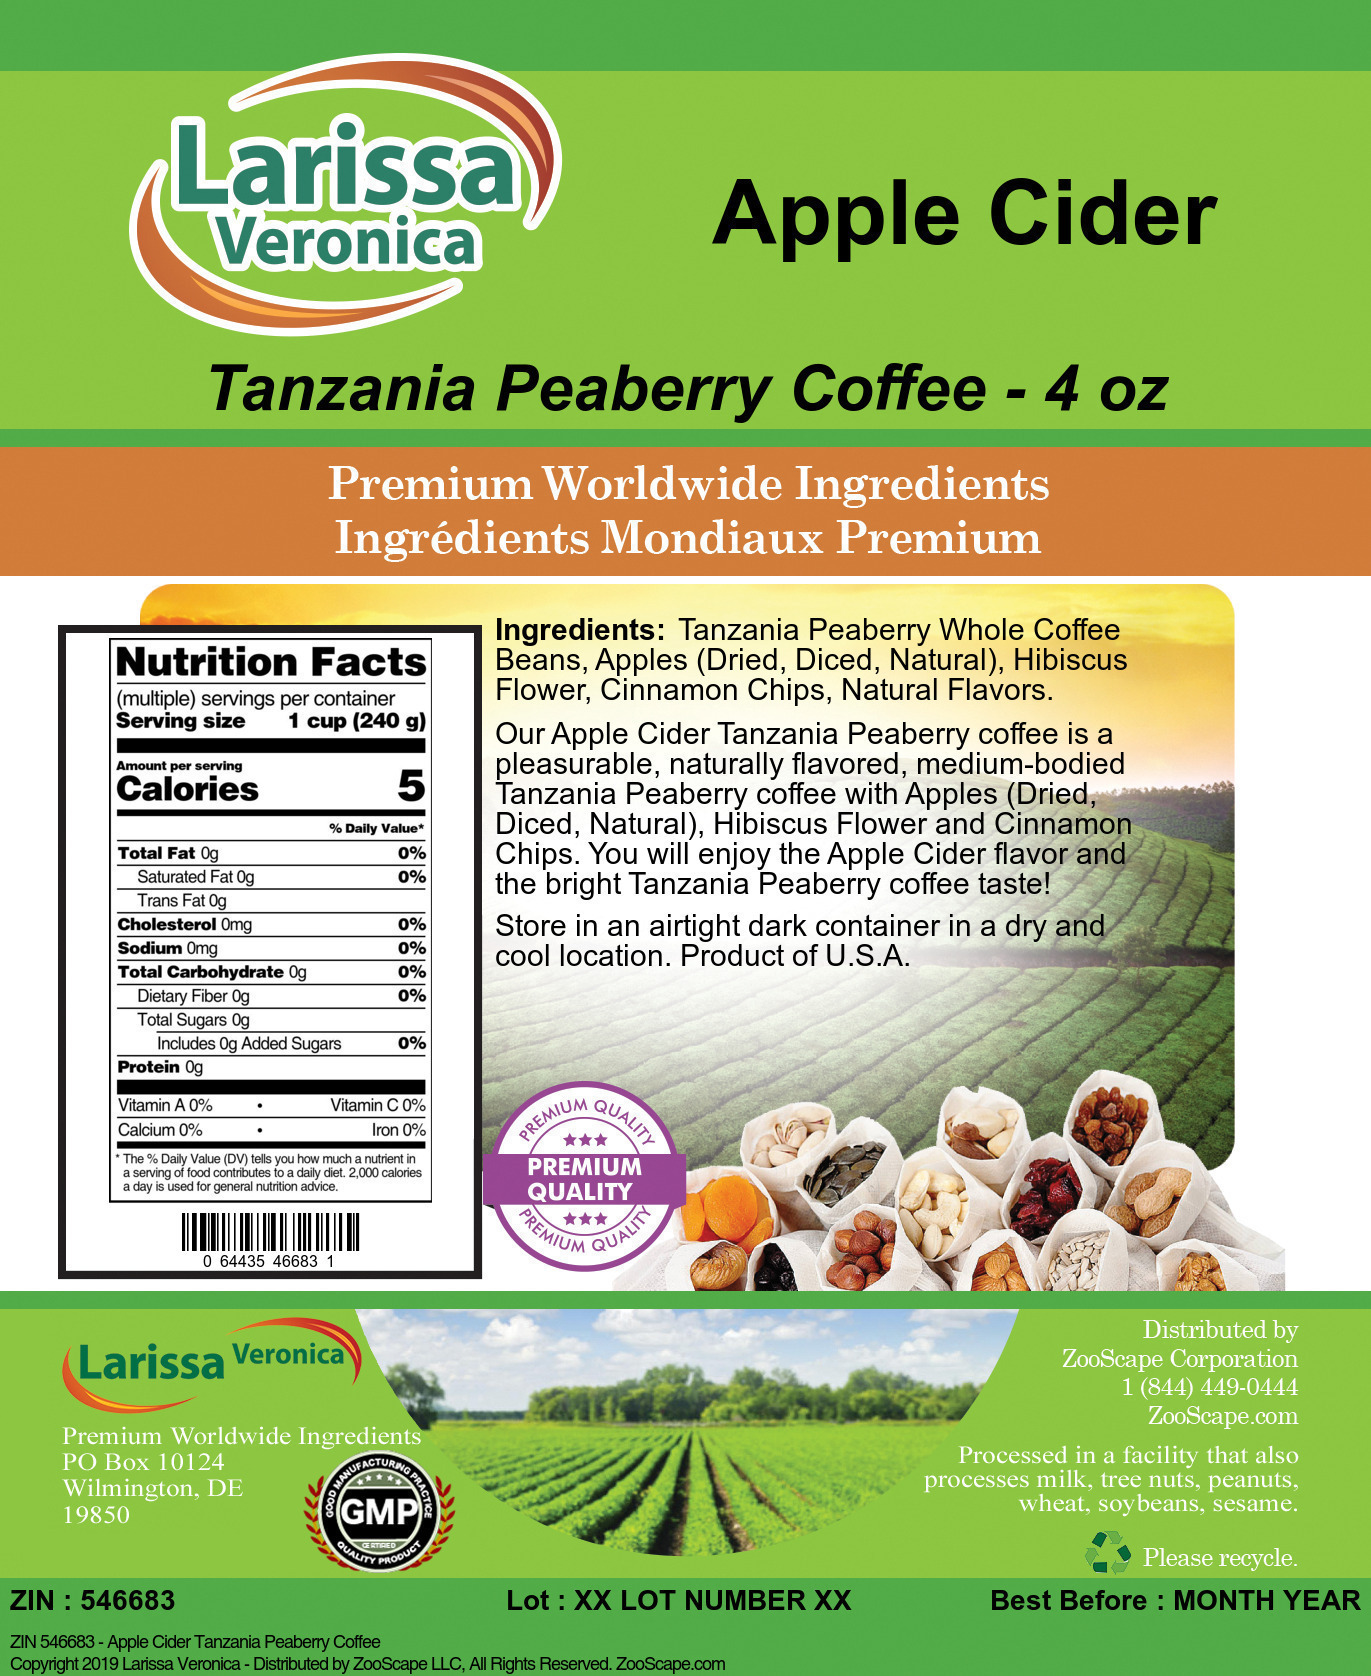 Apple Cider Tanzania Peaberry Coffee - Label